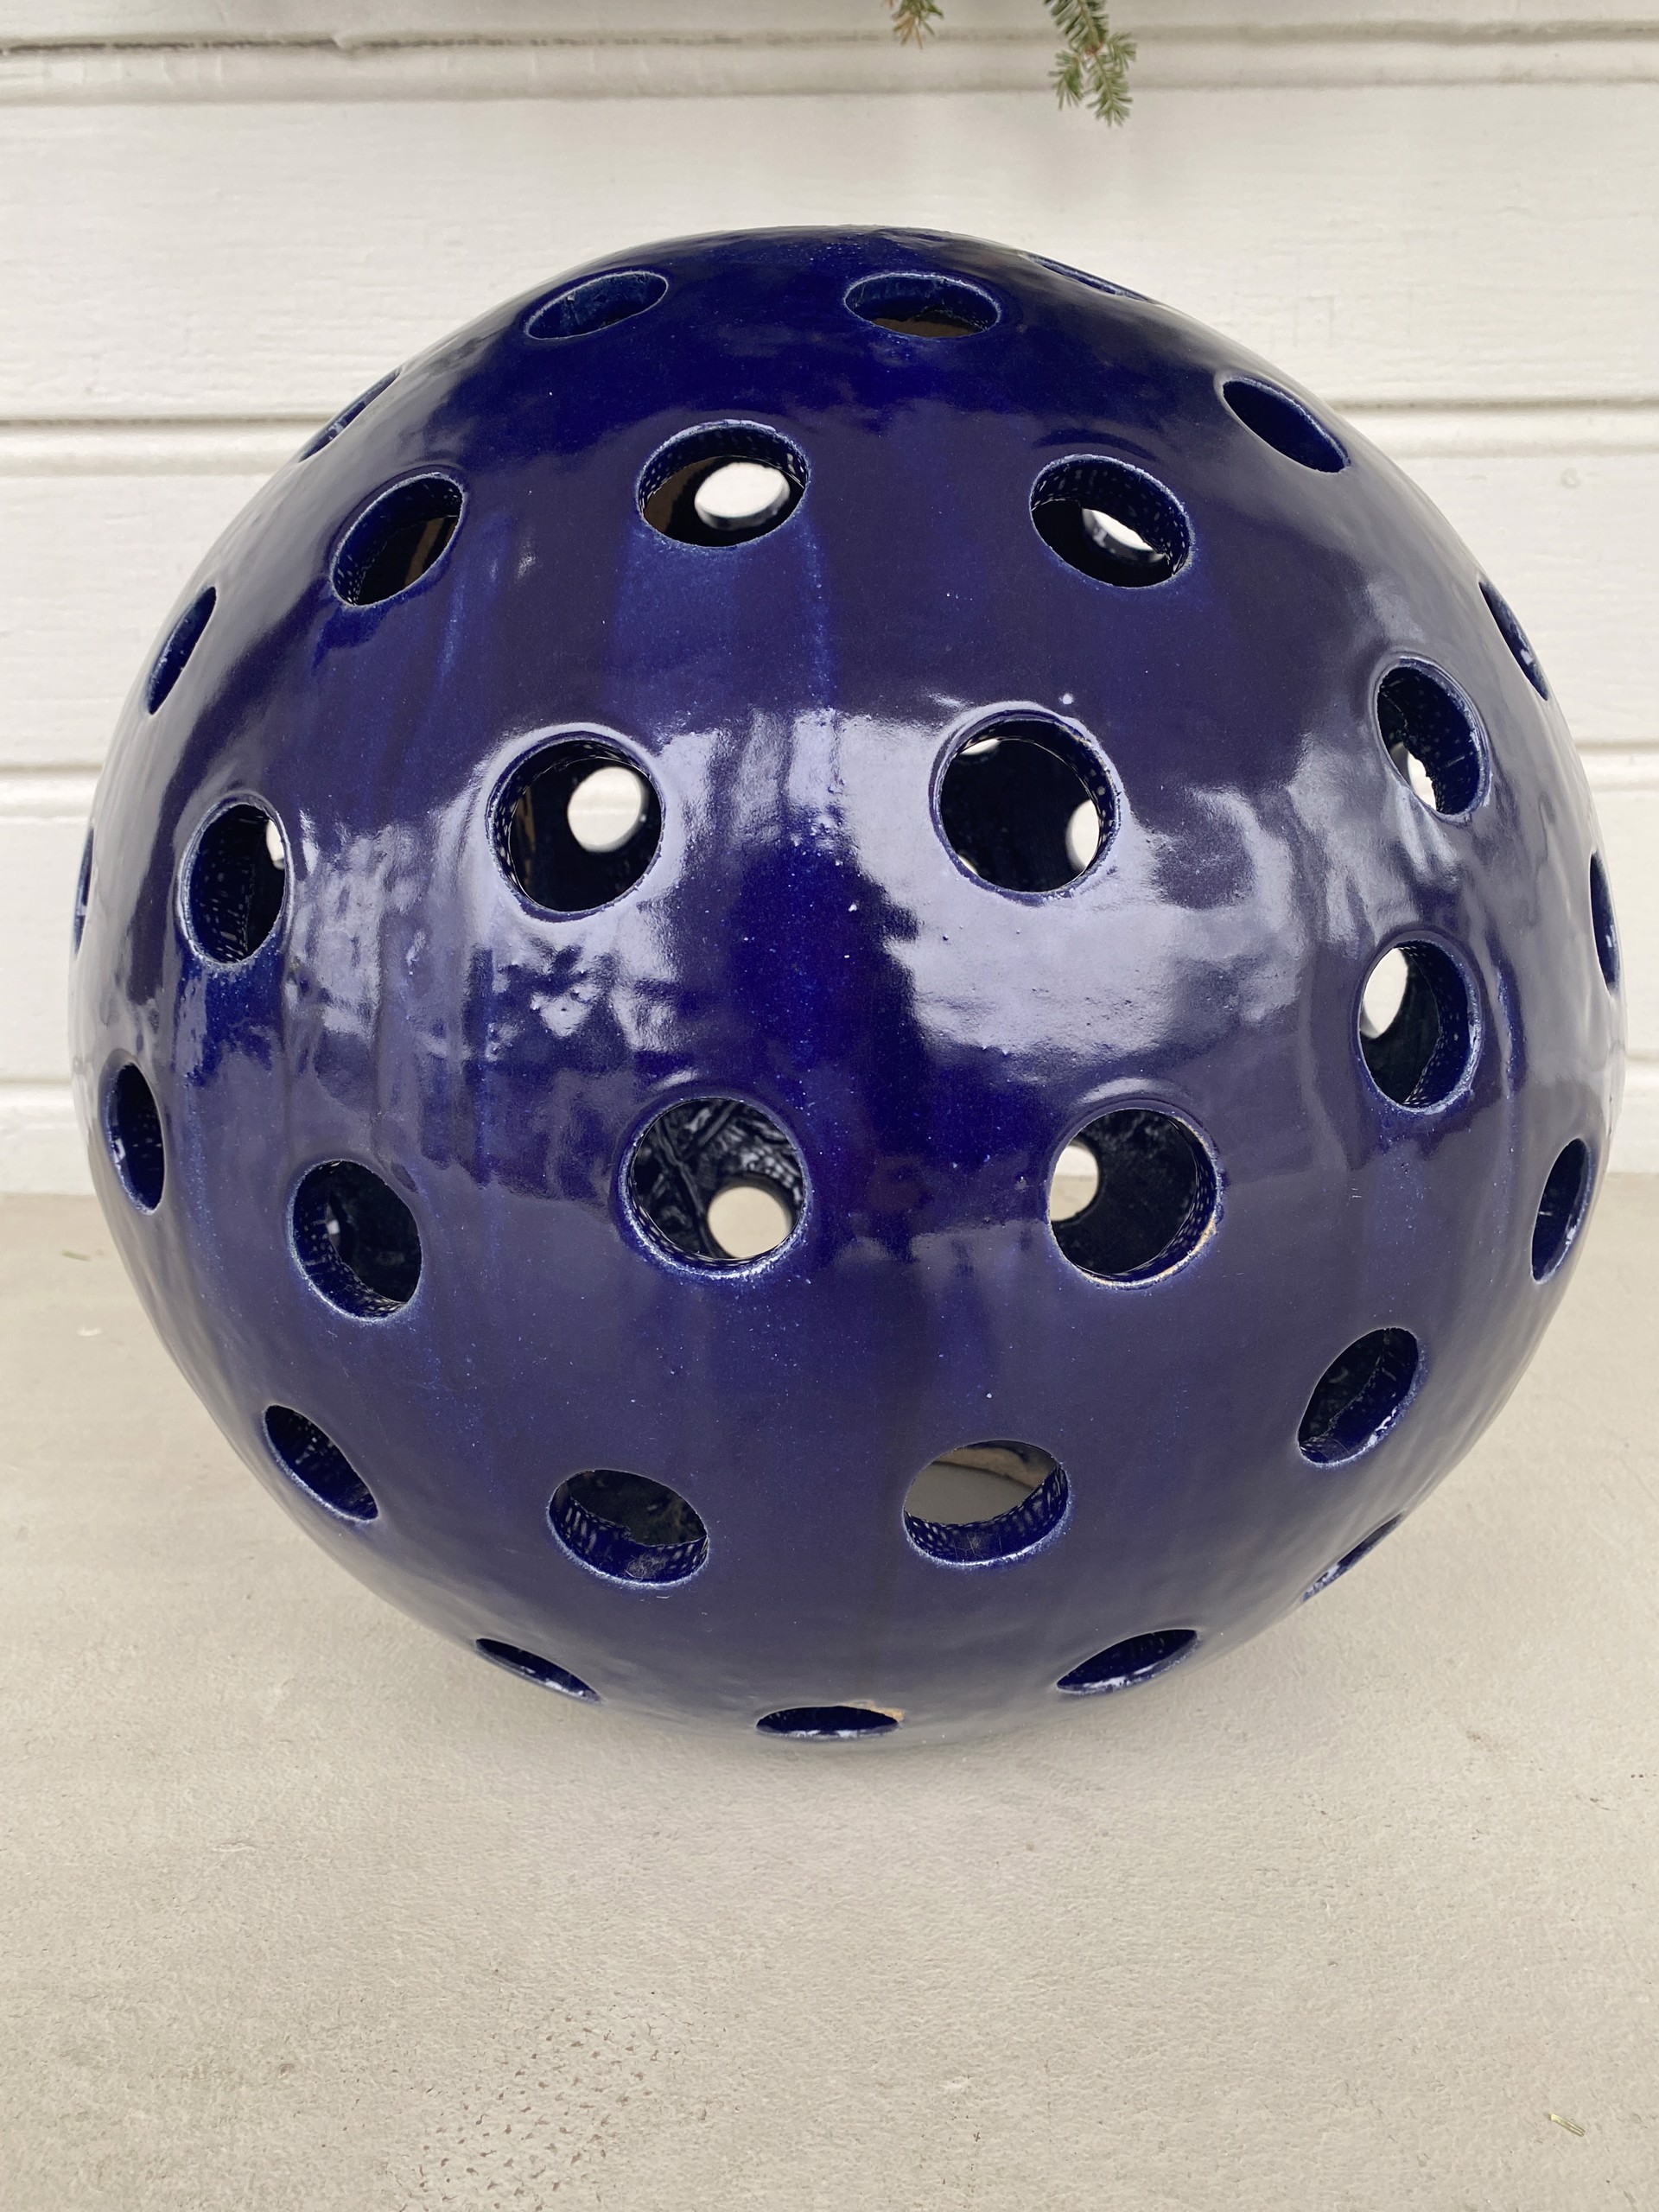 Medium Sphere by Virginia Scotchie